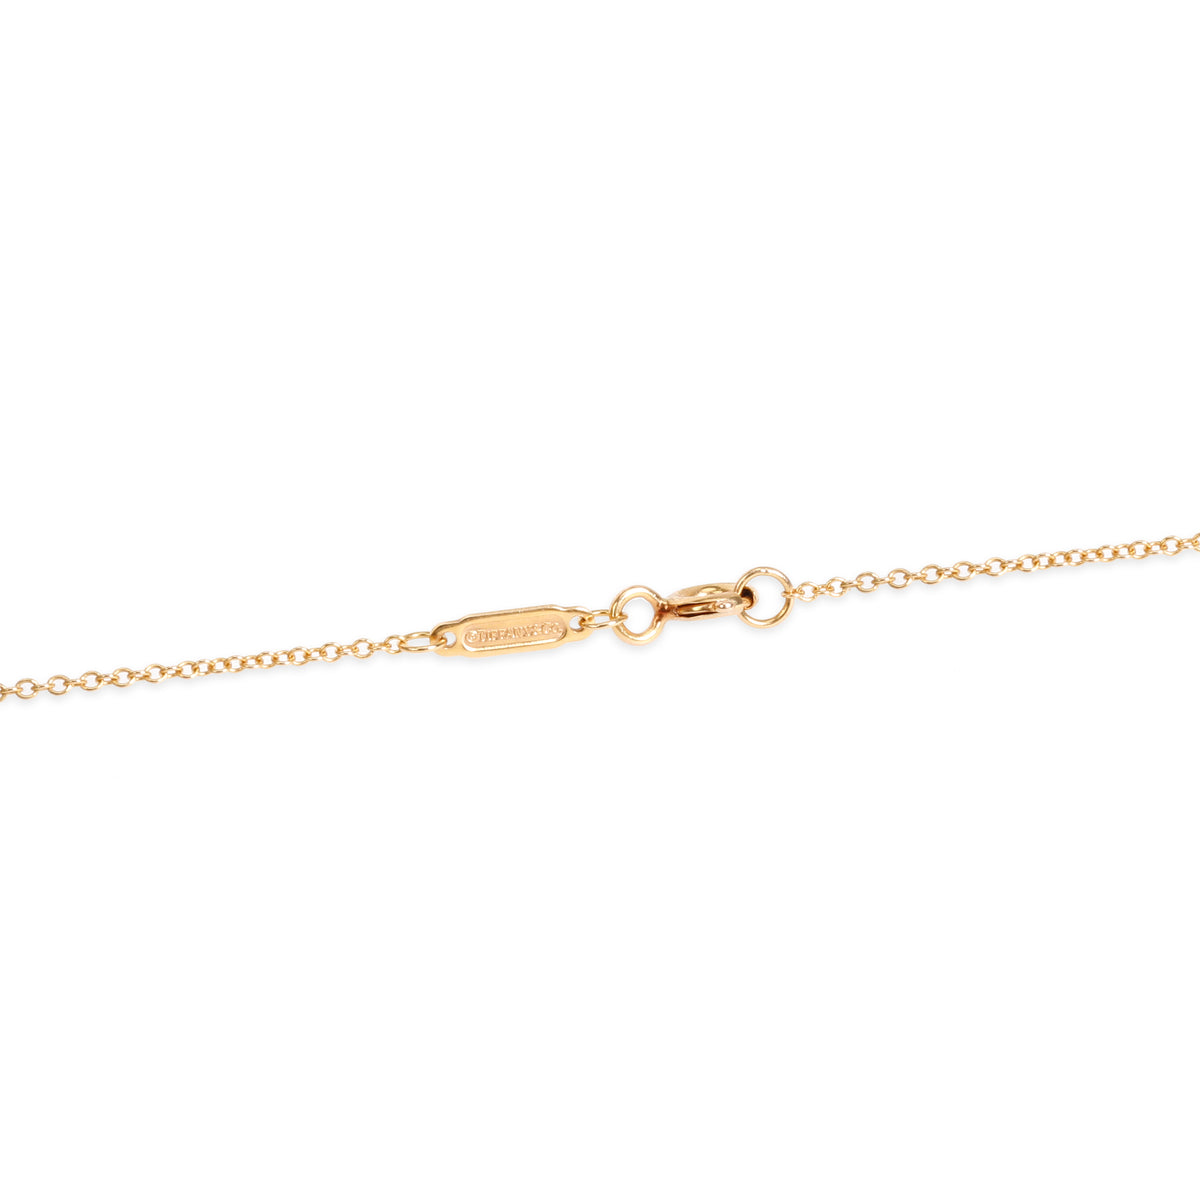 Tiffany & Co. Atlas Pierced Bar Diamond Pendant Necklace in 18KT Gold 0.01 CTW